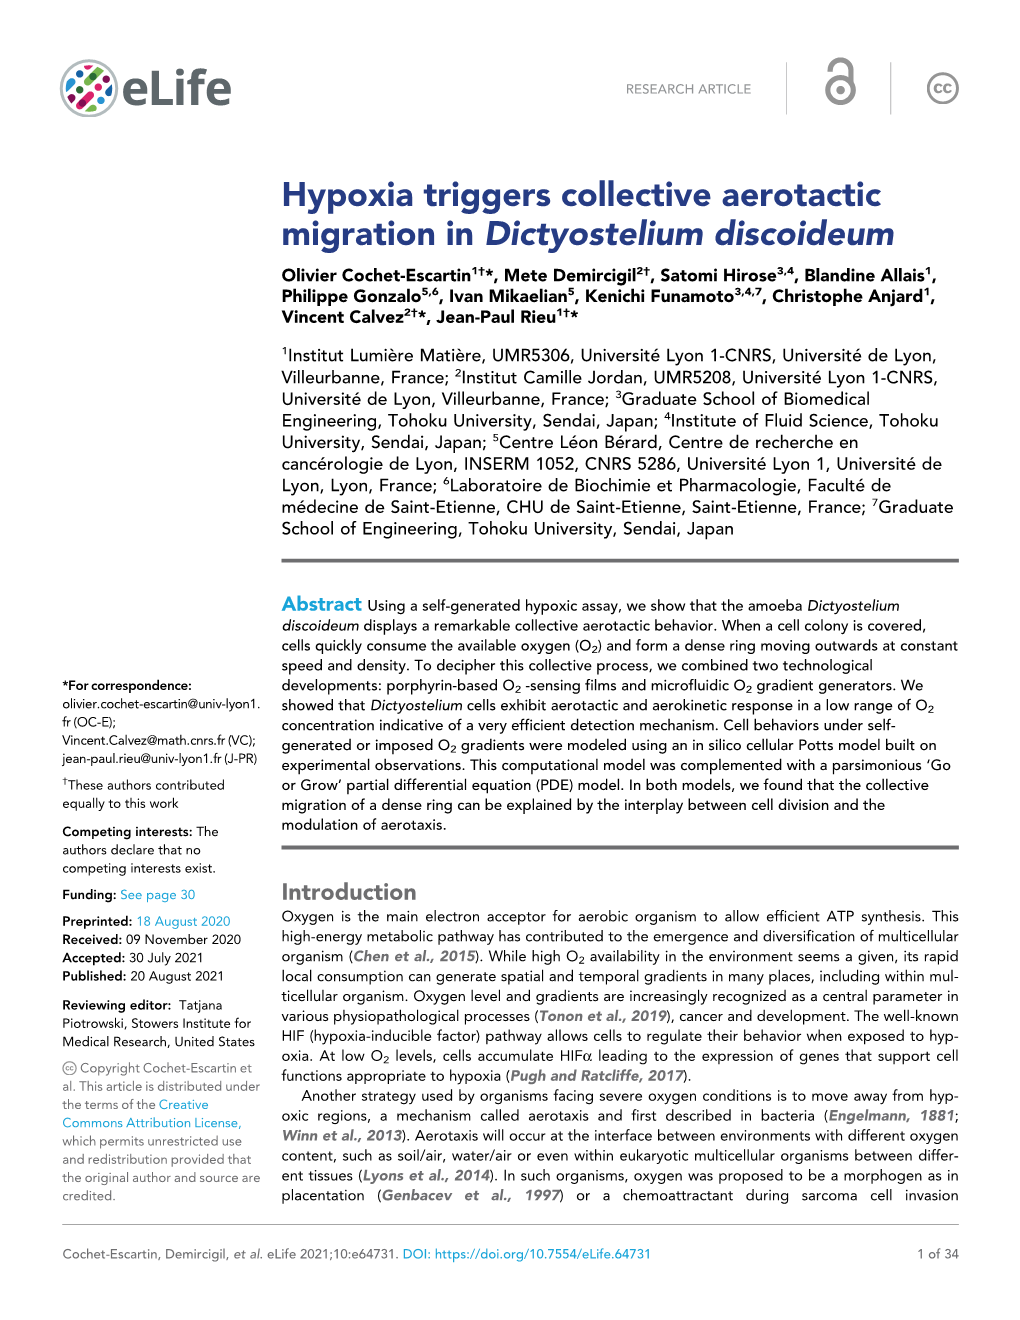 Hypoxia Triggers Collective Aerotactic Migration in Dictyostelium Discoideum